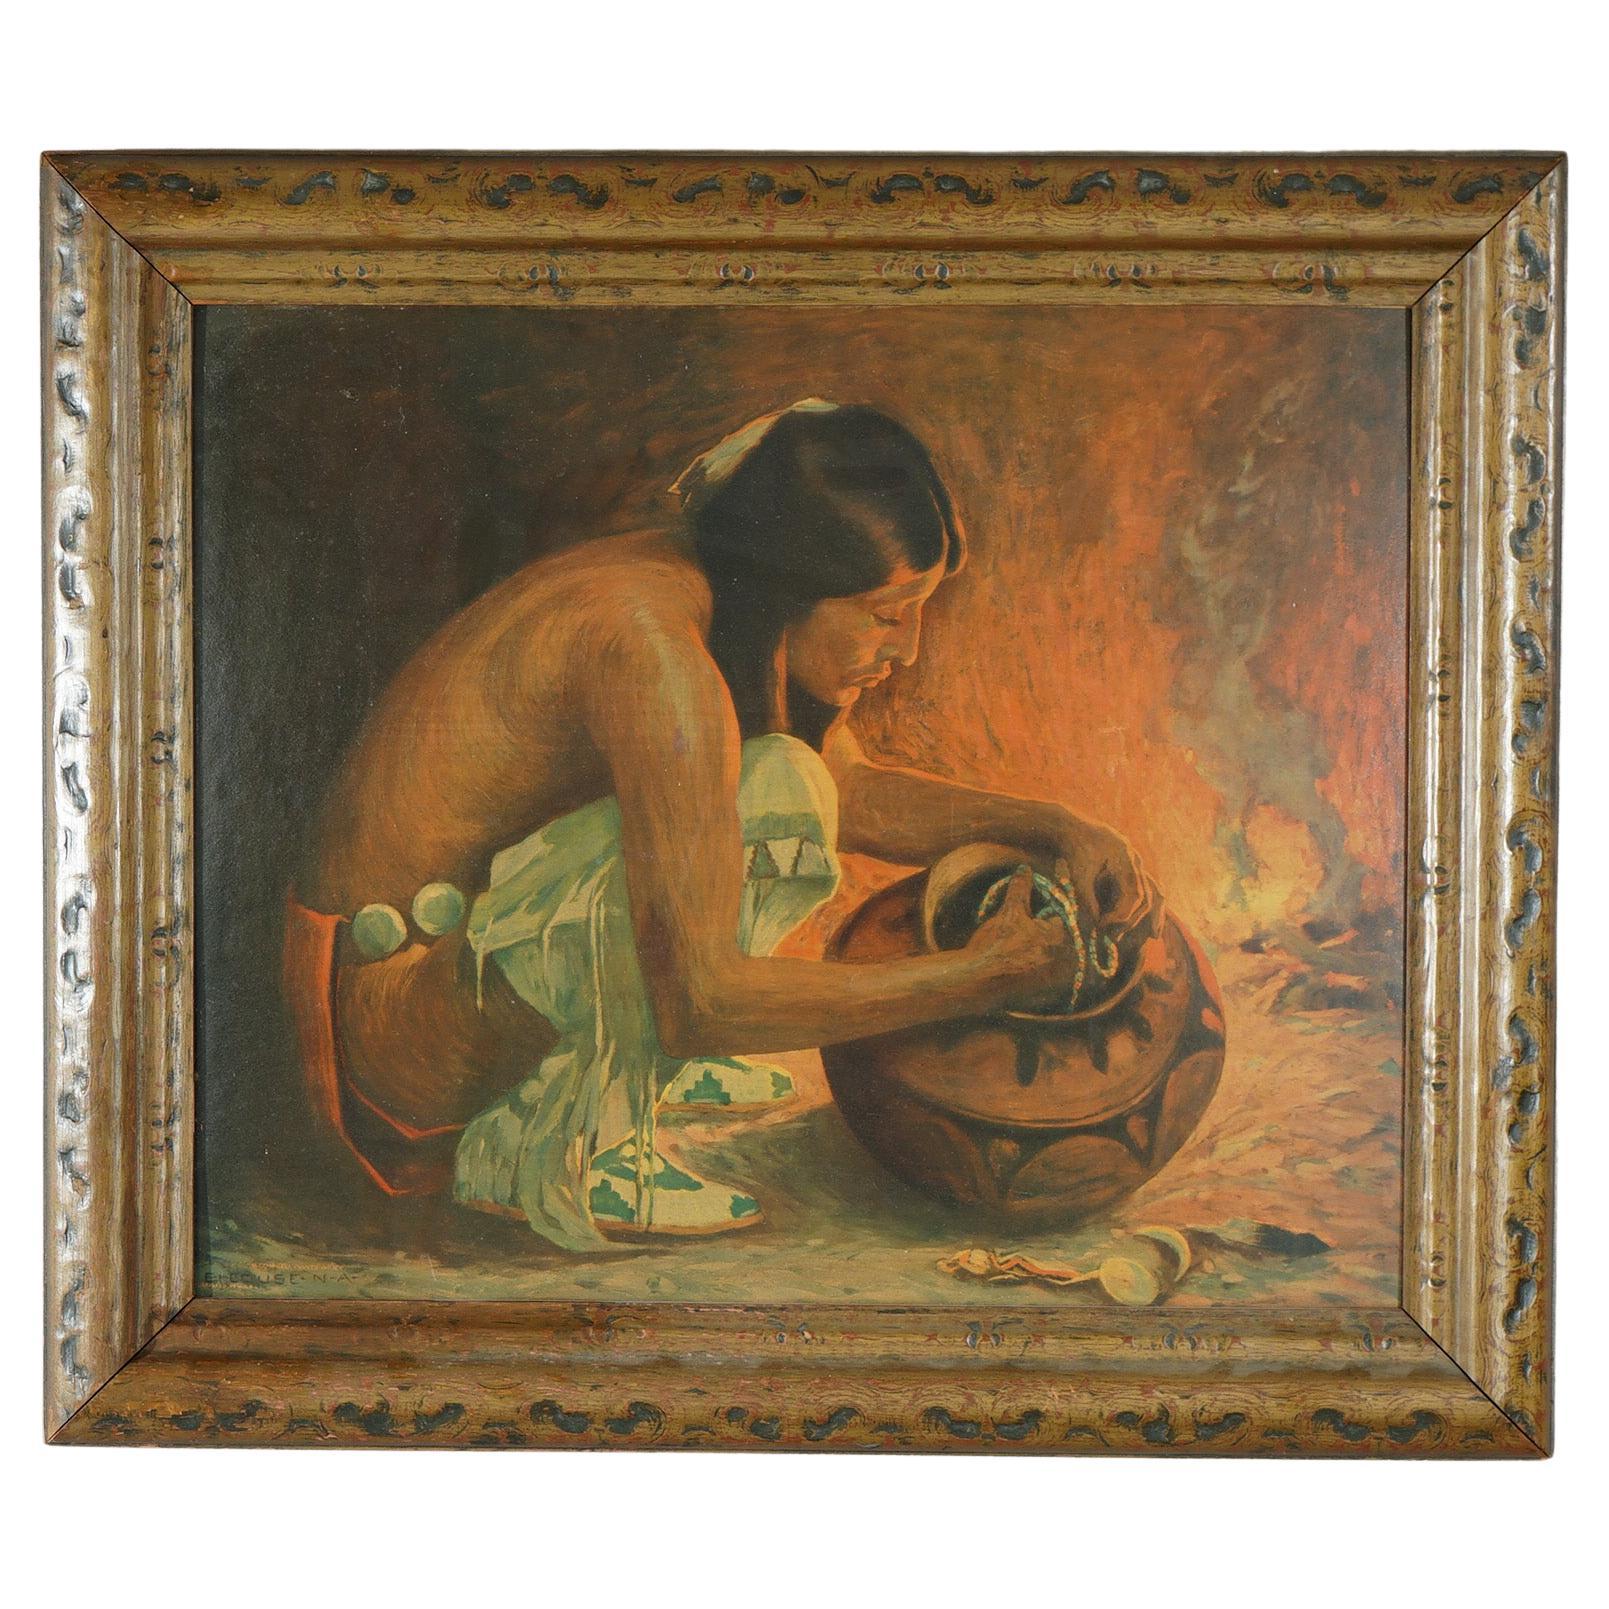 Antique Arts & Crafts Navajo Painting “Treasure Jar” by E.I. Couse Circa 